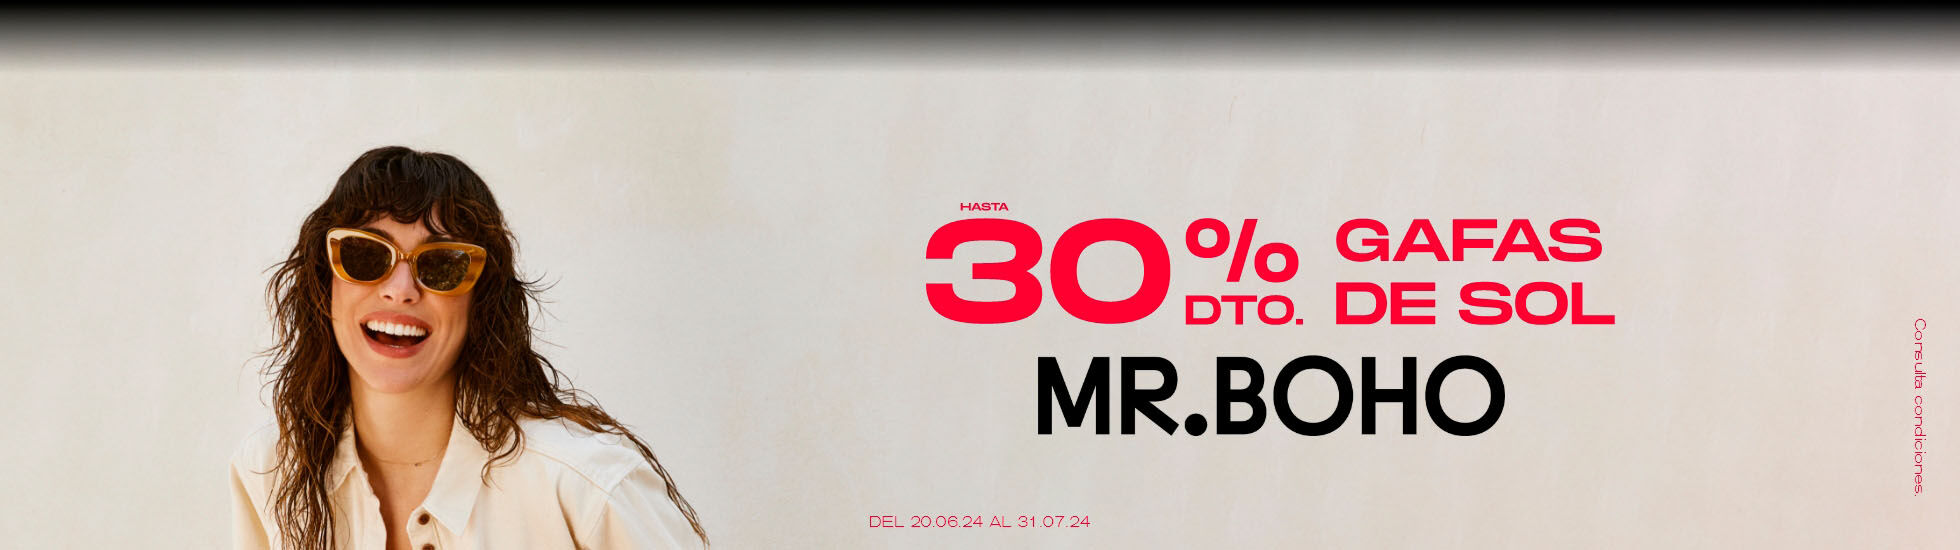 MR. BOHO SOL 30%